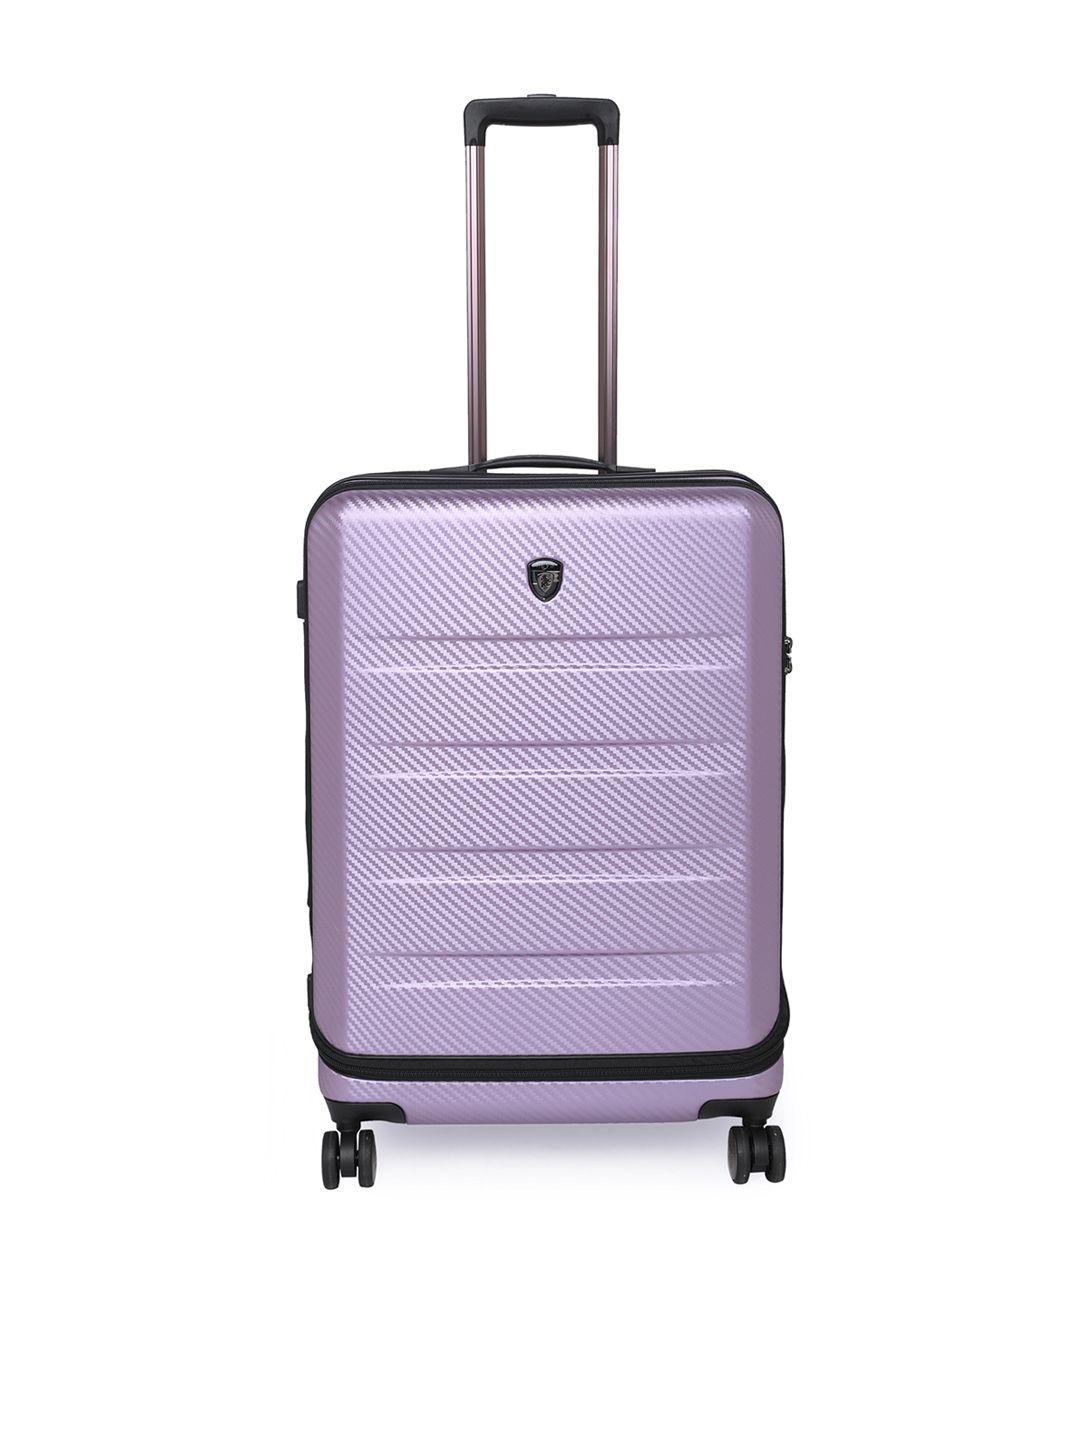 heys ez access 2.0 rang purple color hard case trolley bag - 26"